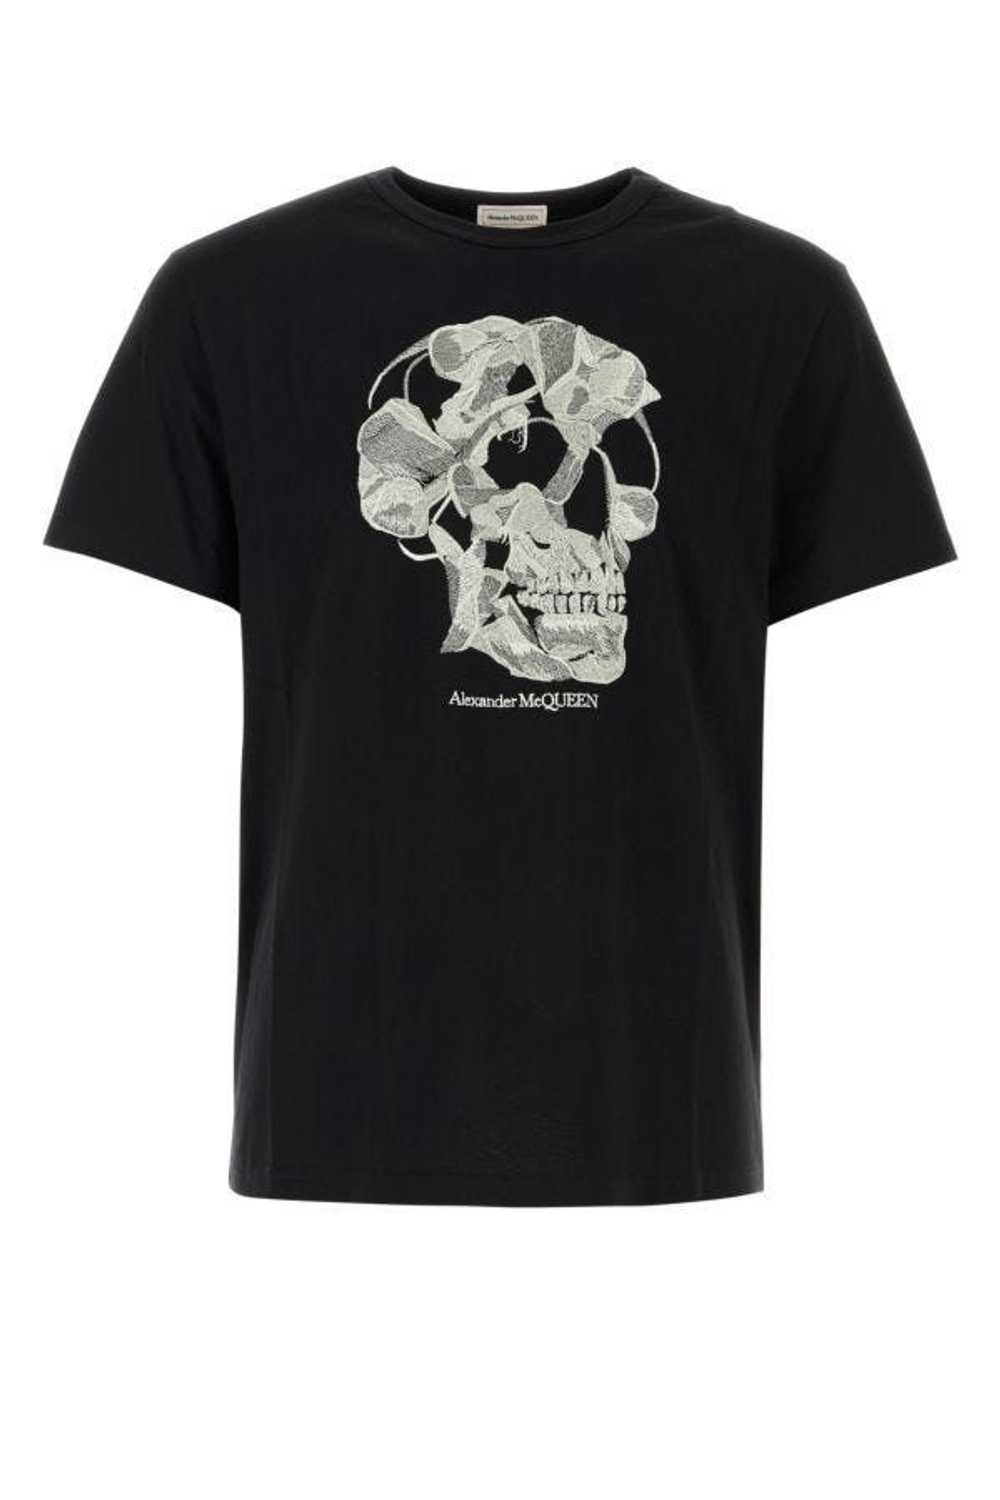 Alexander McQueen Black Cotton T-Shirt - image 3